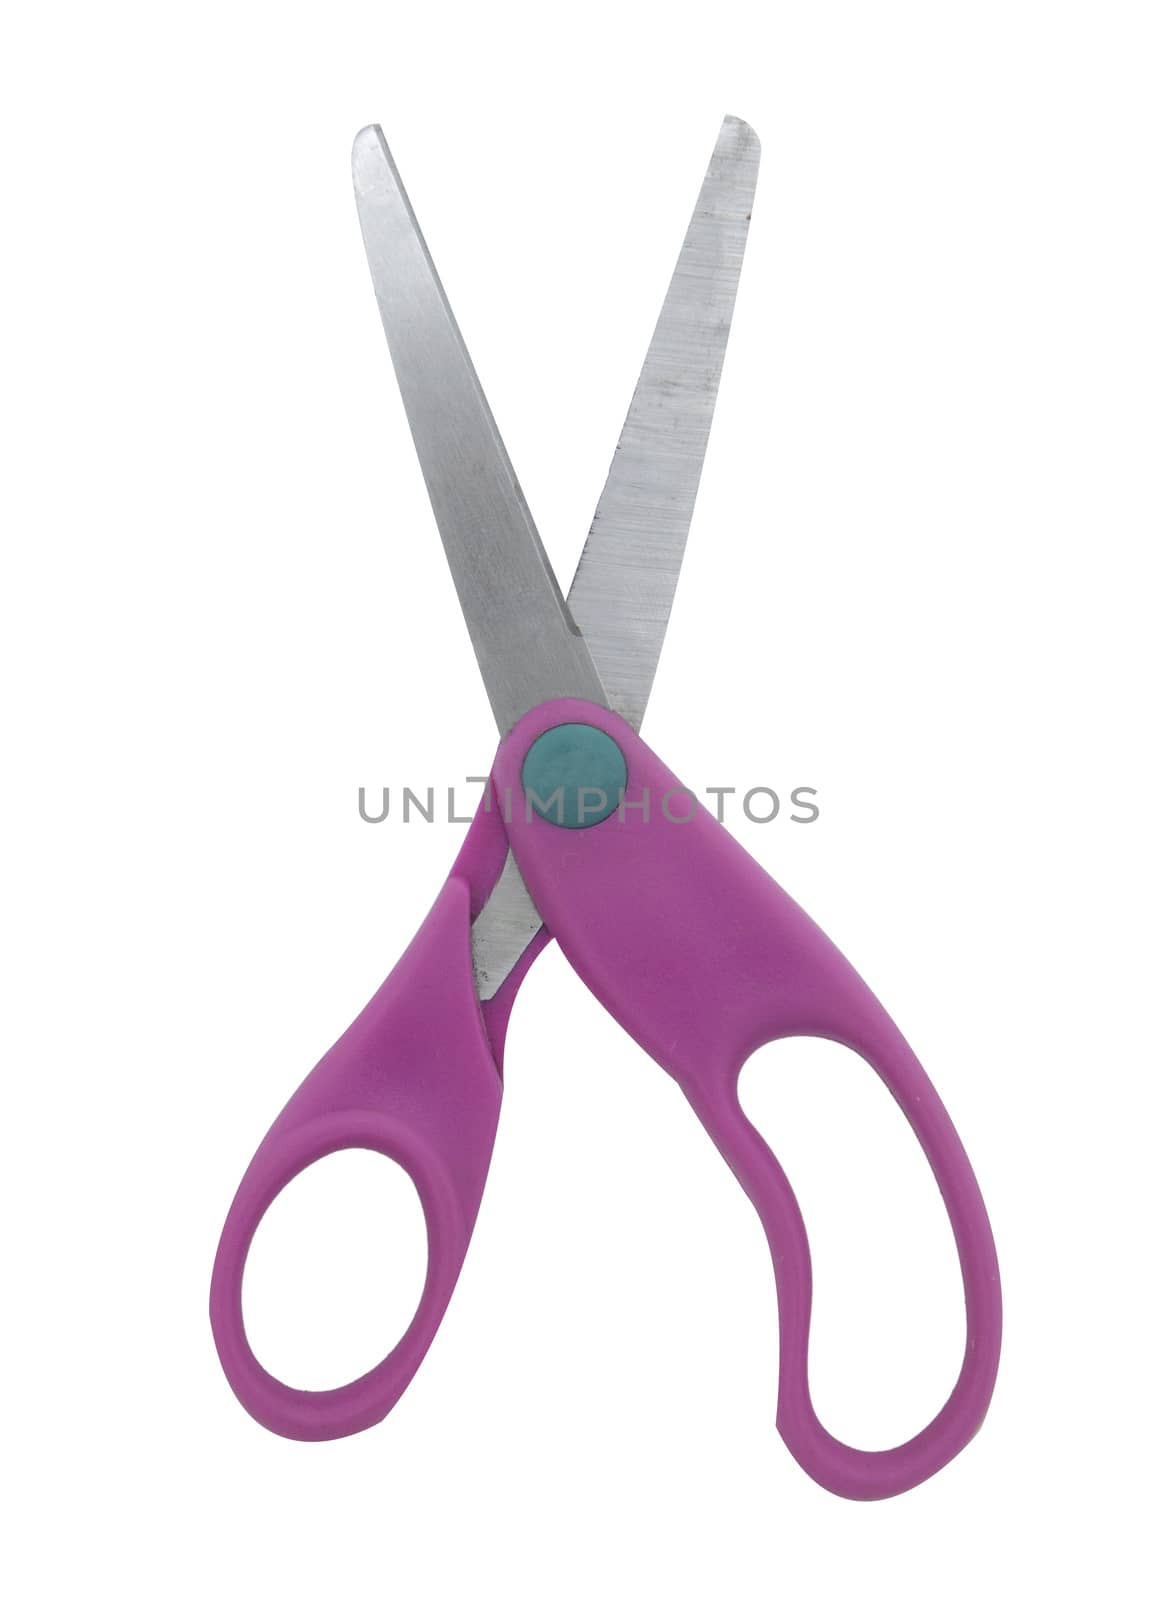 Pink scissors by designsstock